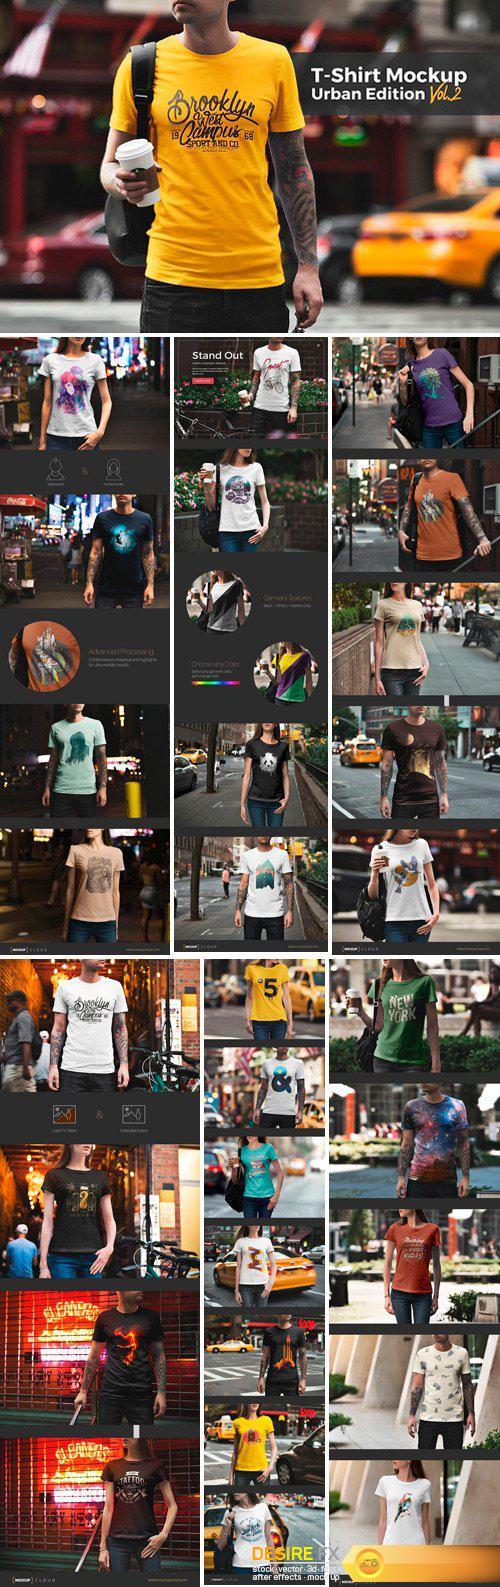 CM - T-Shirt Mockup / Urban Edition 1664349